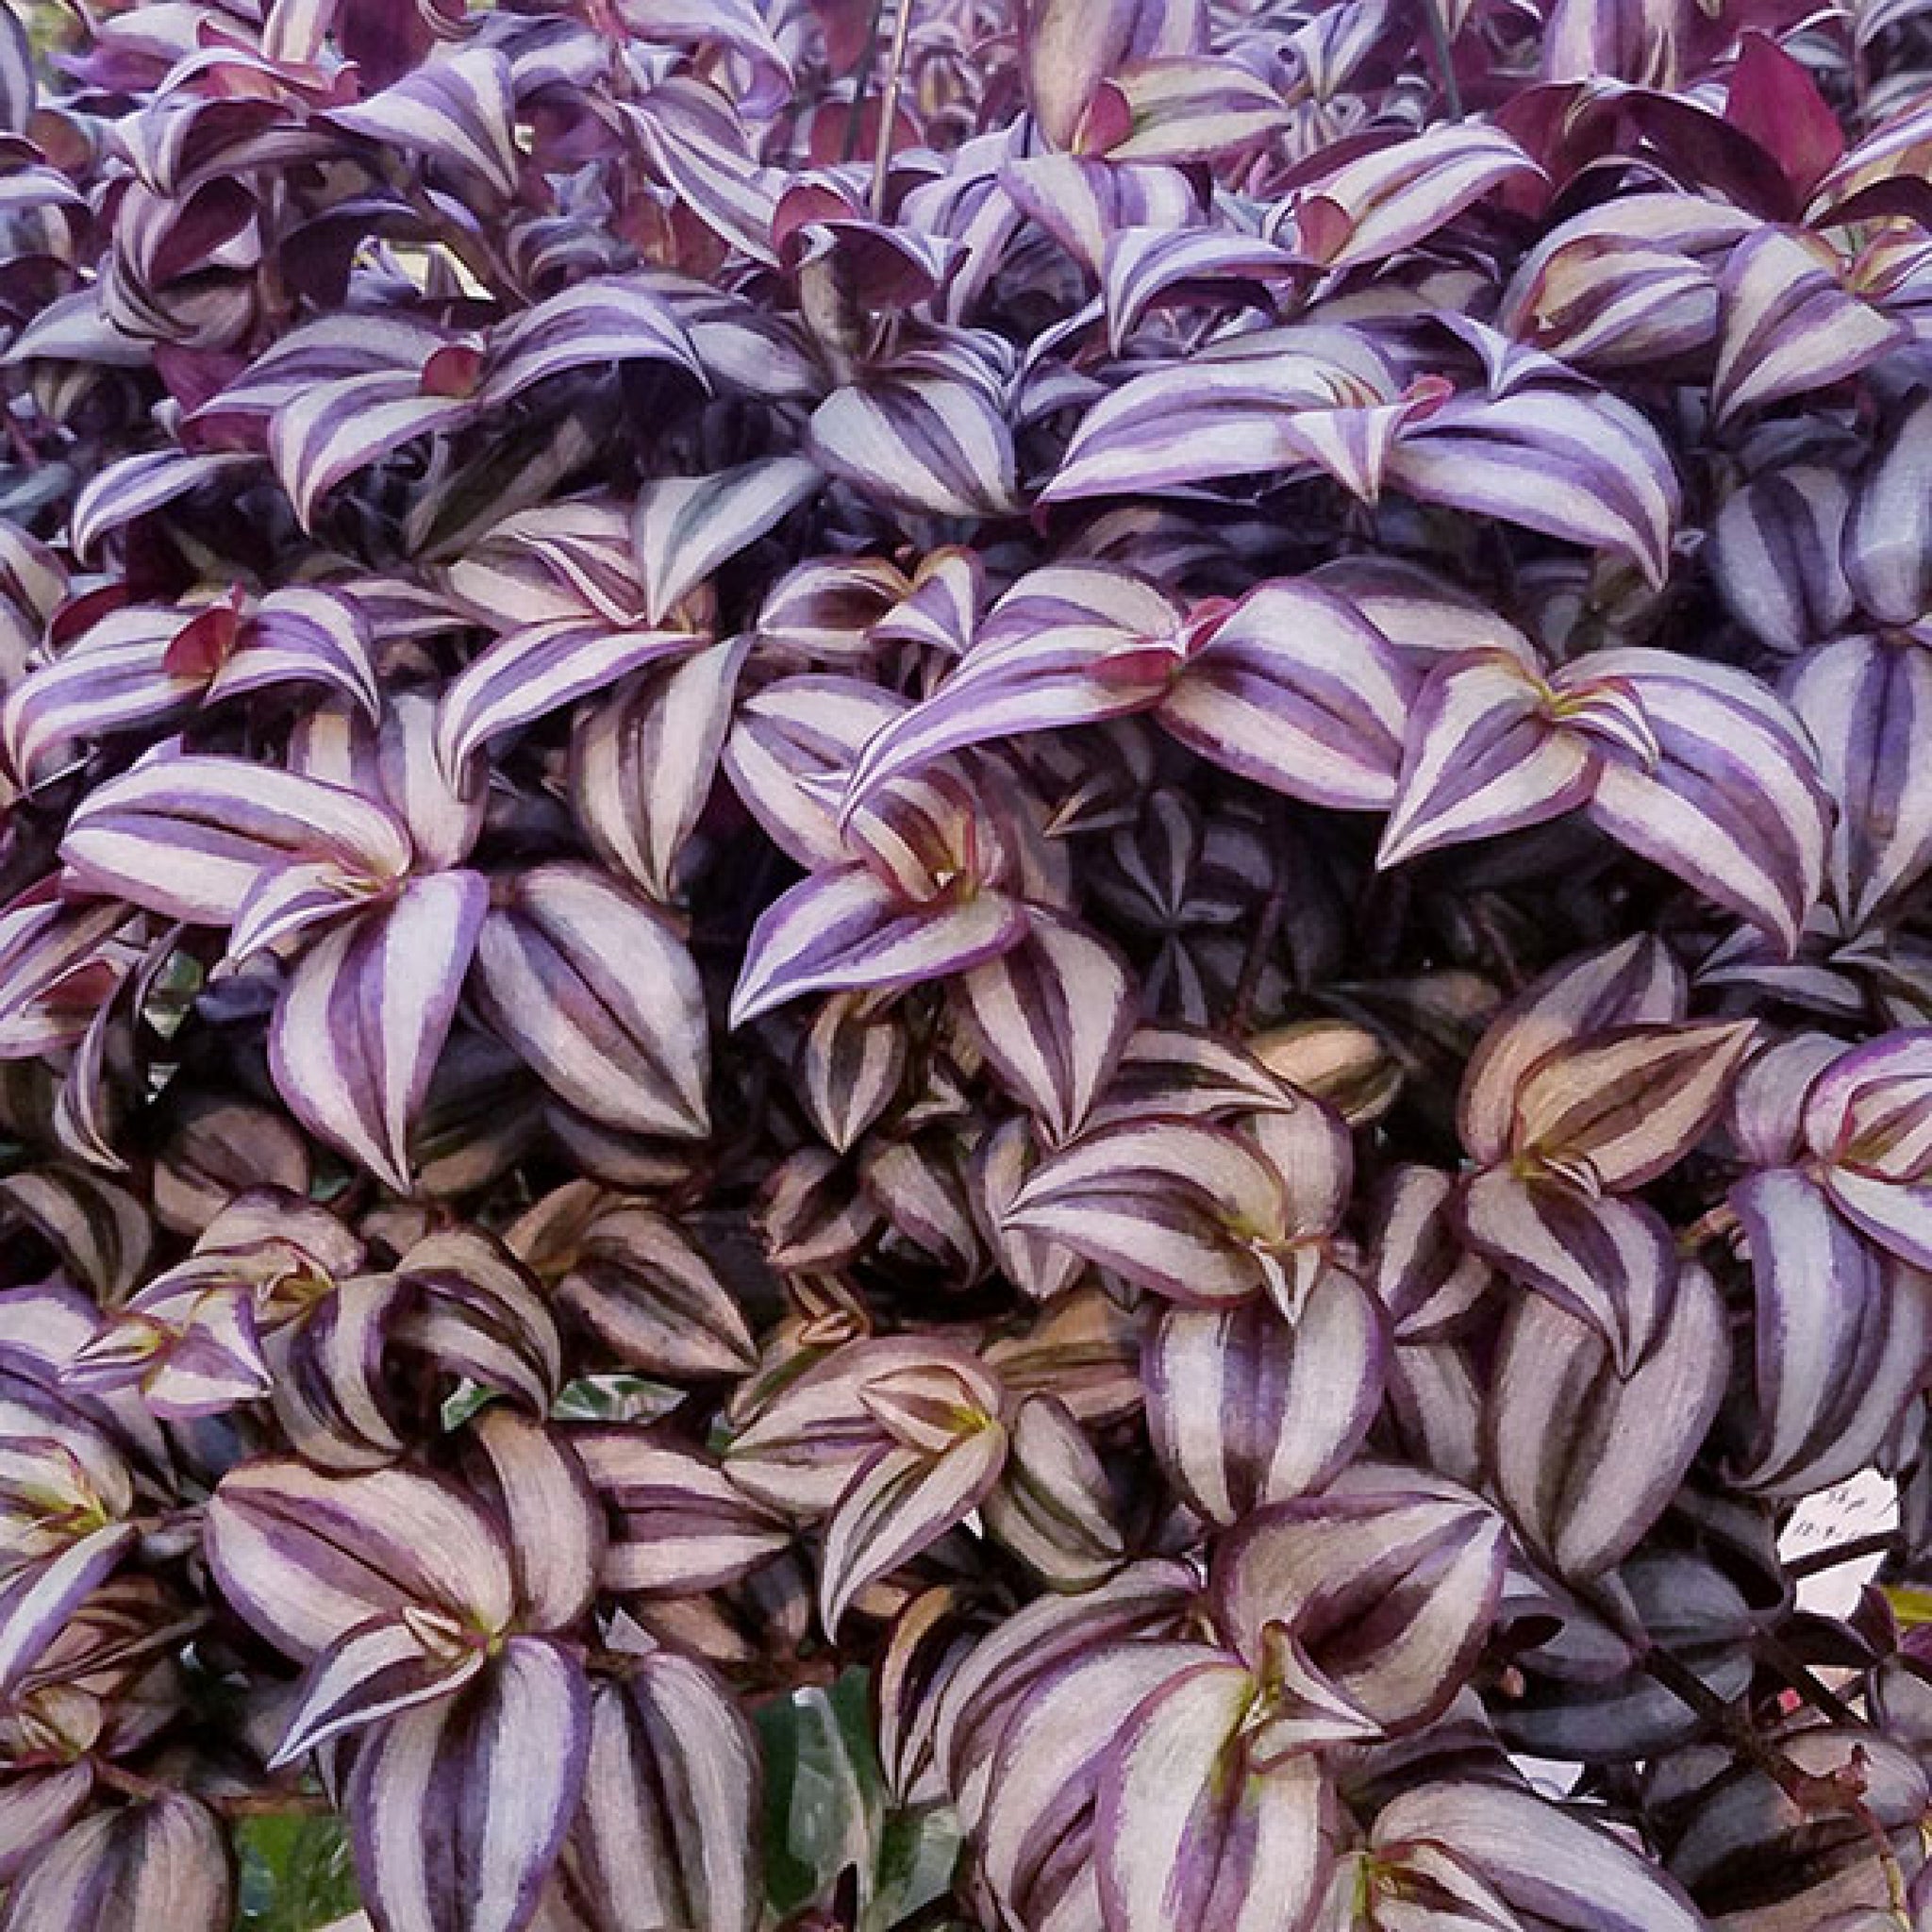 Tradescantia zebrina "Purple Tinge"